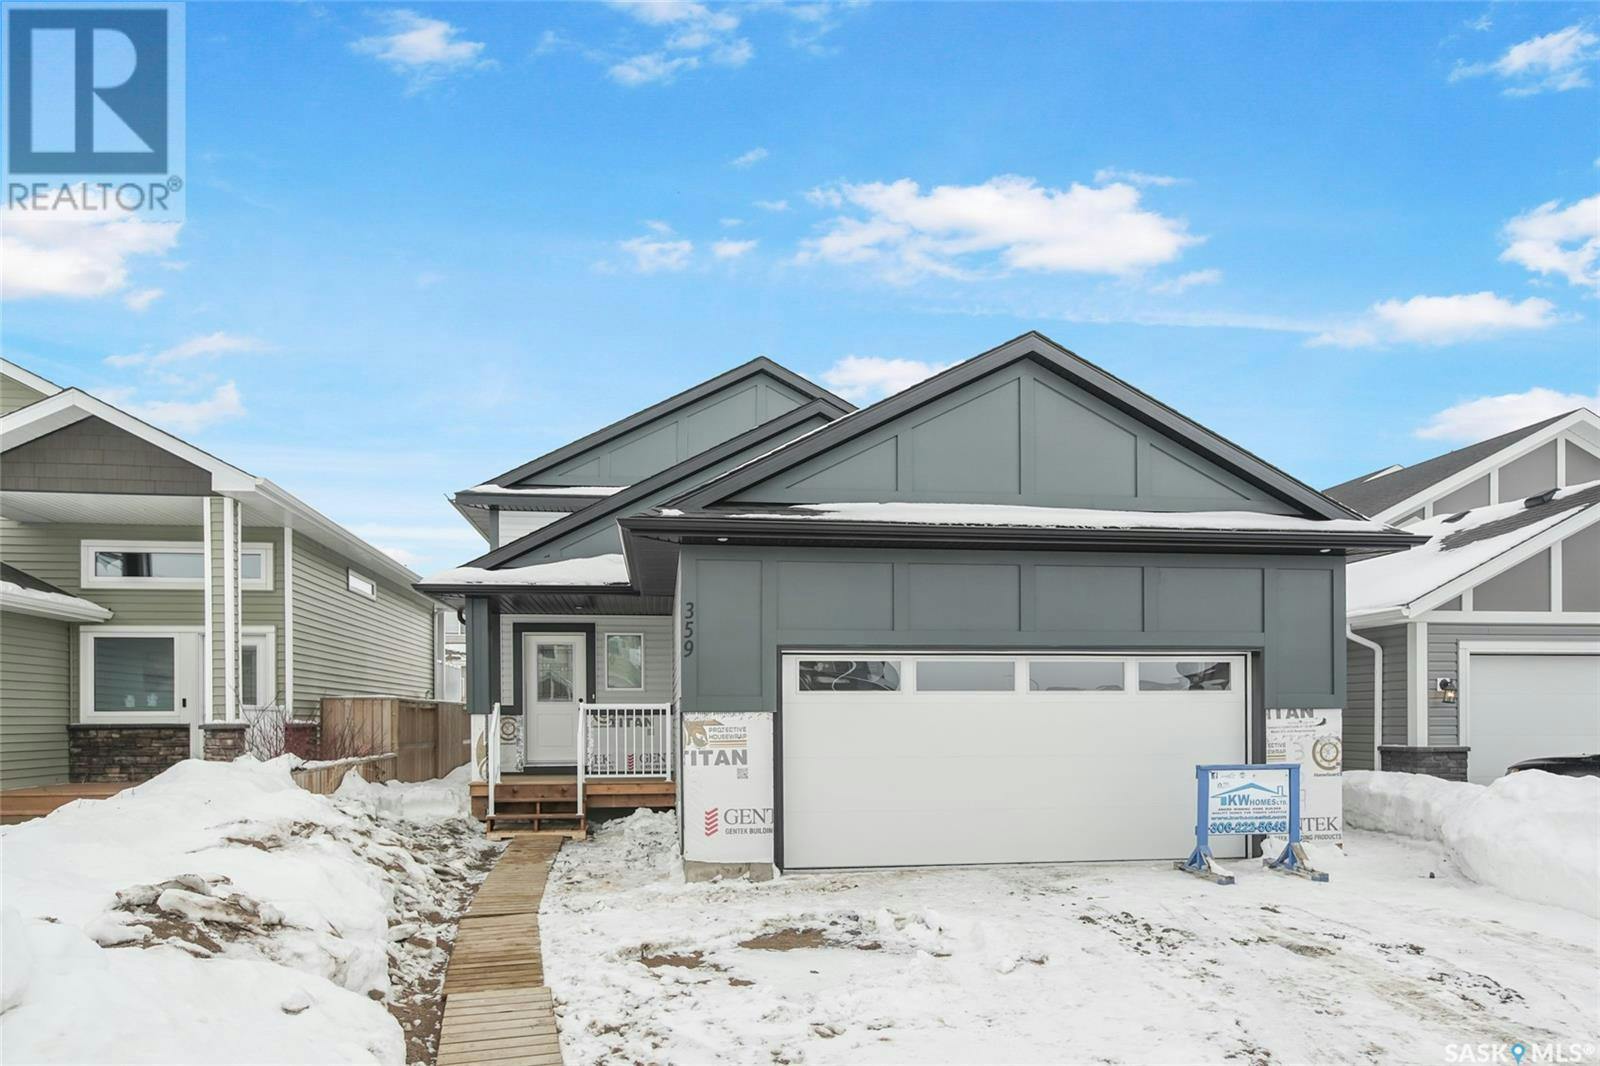 Commercial Property for sale: 359 Labine Crescent,Saskatoon,Saskatchewan